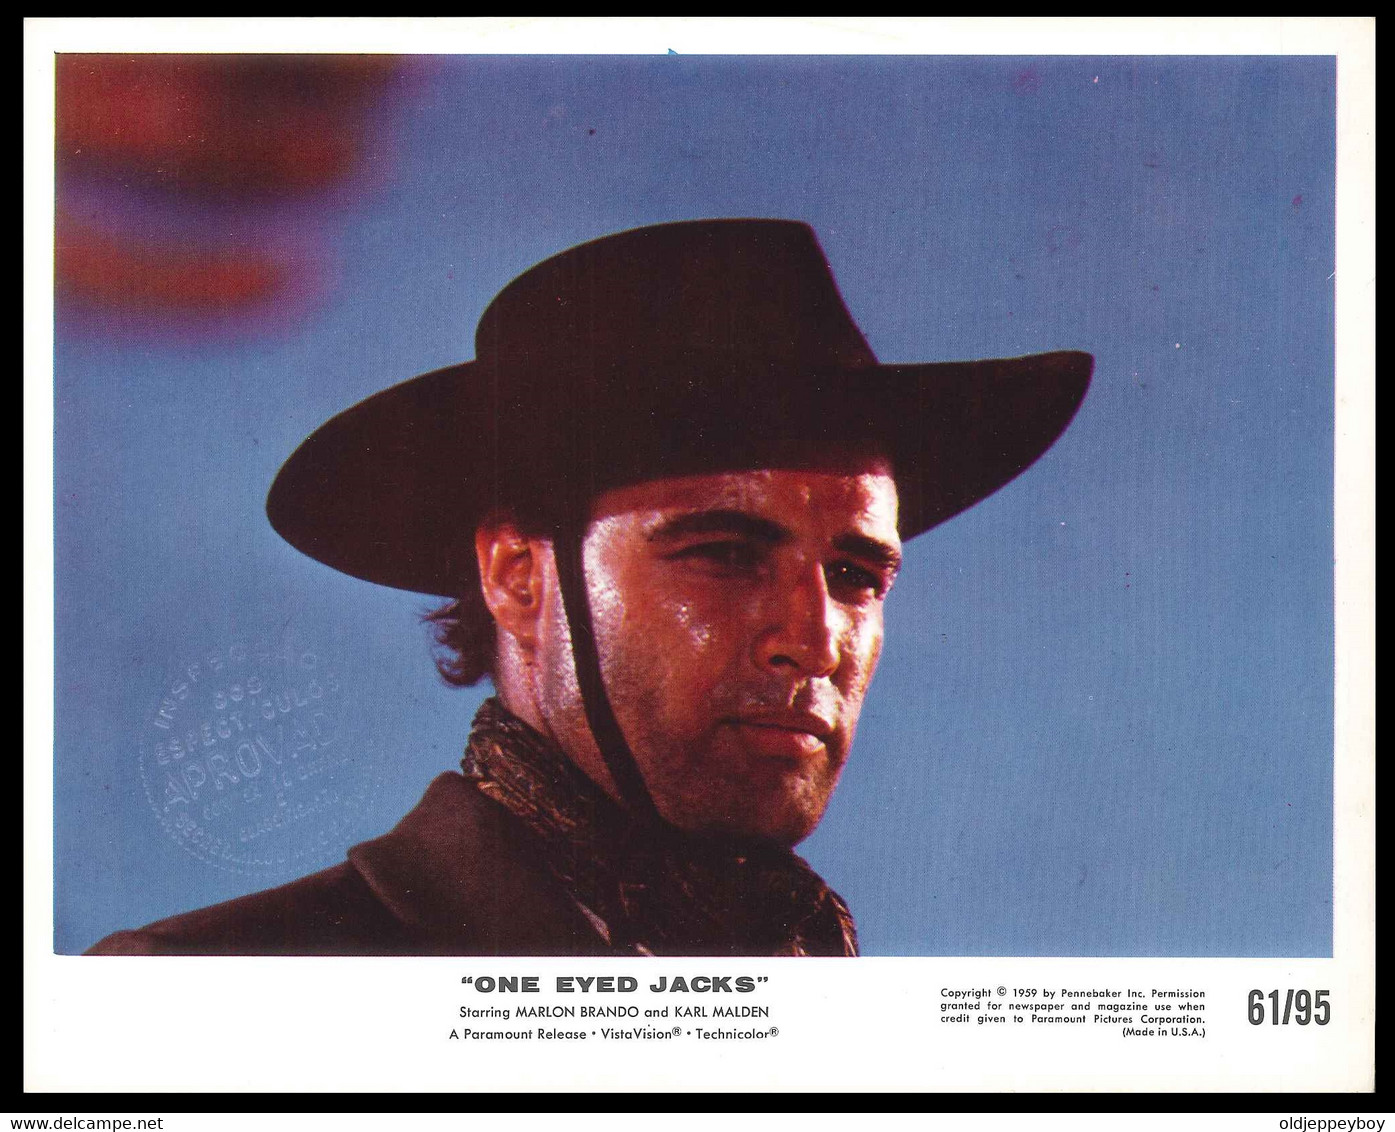 One Eyed Jacks-Marlon Brando-Karl Malden - 20 X 25 Cm - Colour - Movie Still- Western Paramount Release Technicolour - Fotos